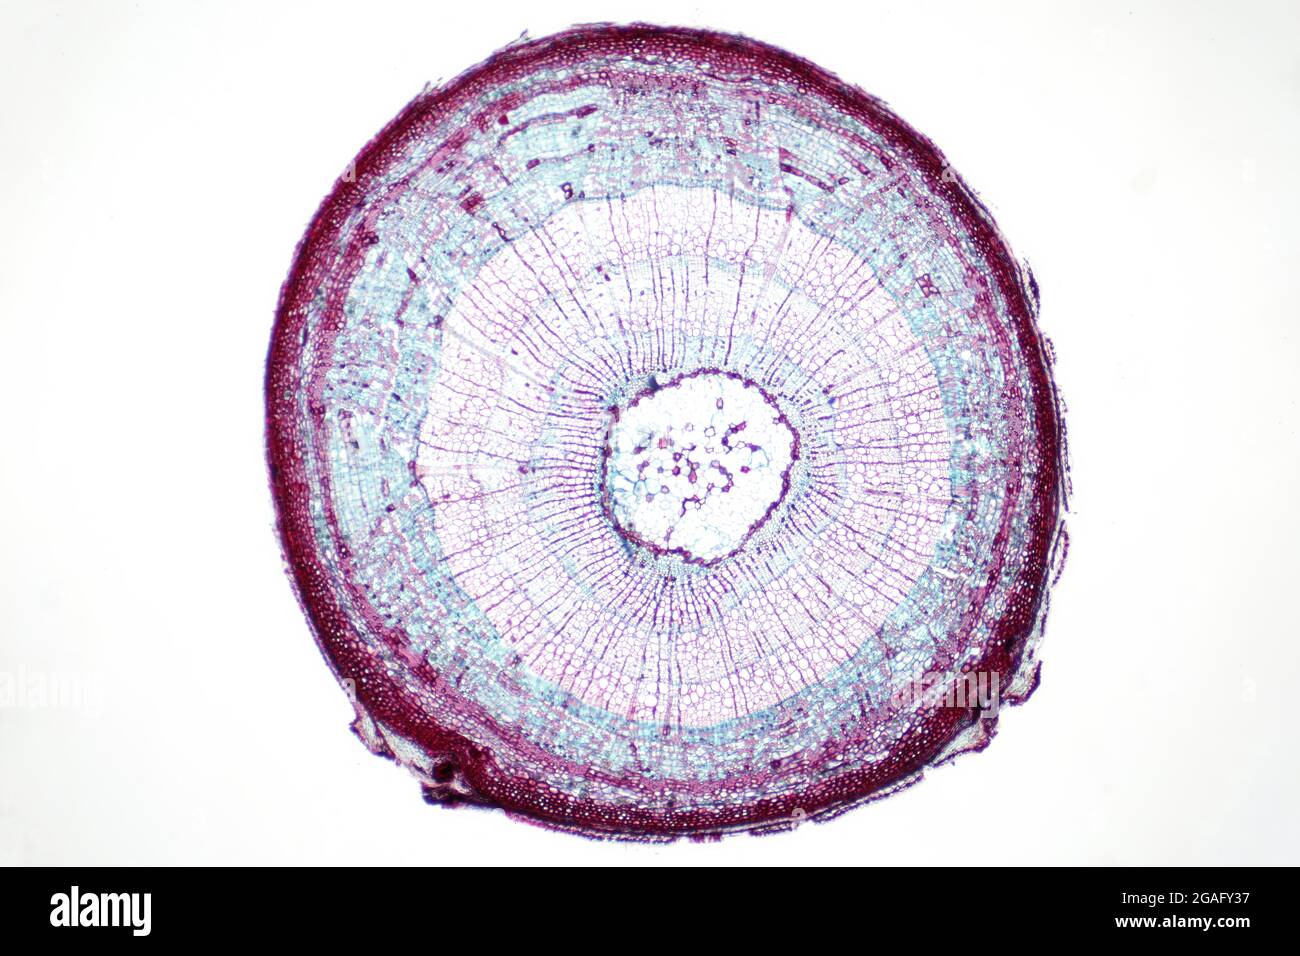 Plant stem, light micrograph Stock Photo